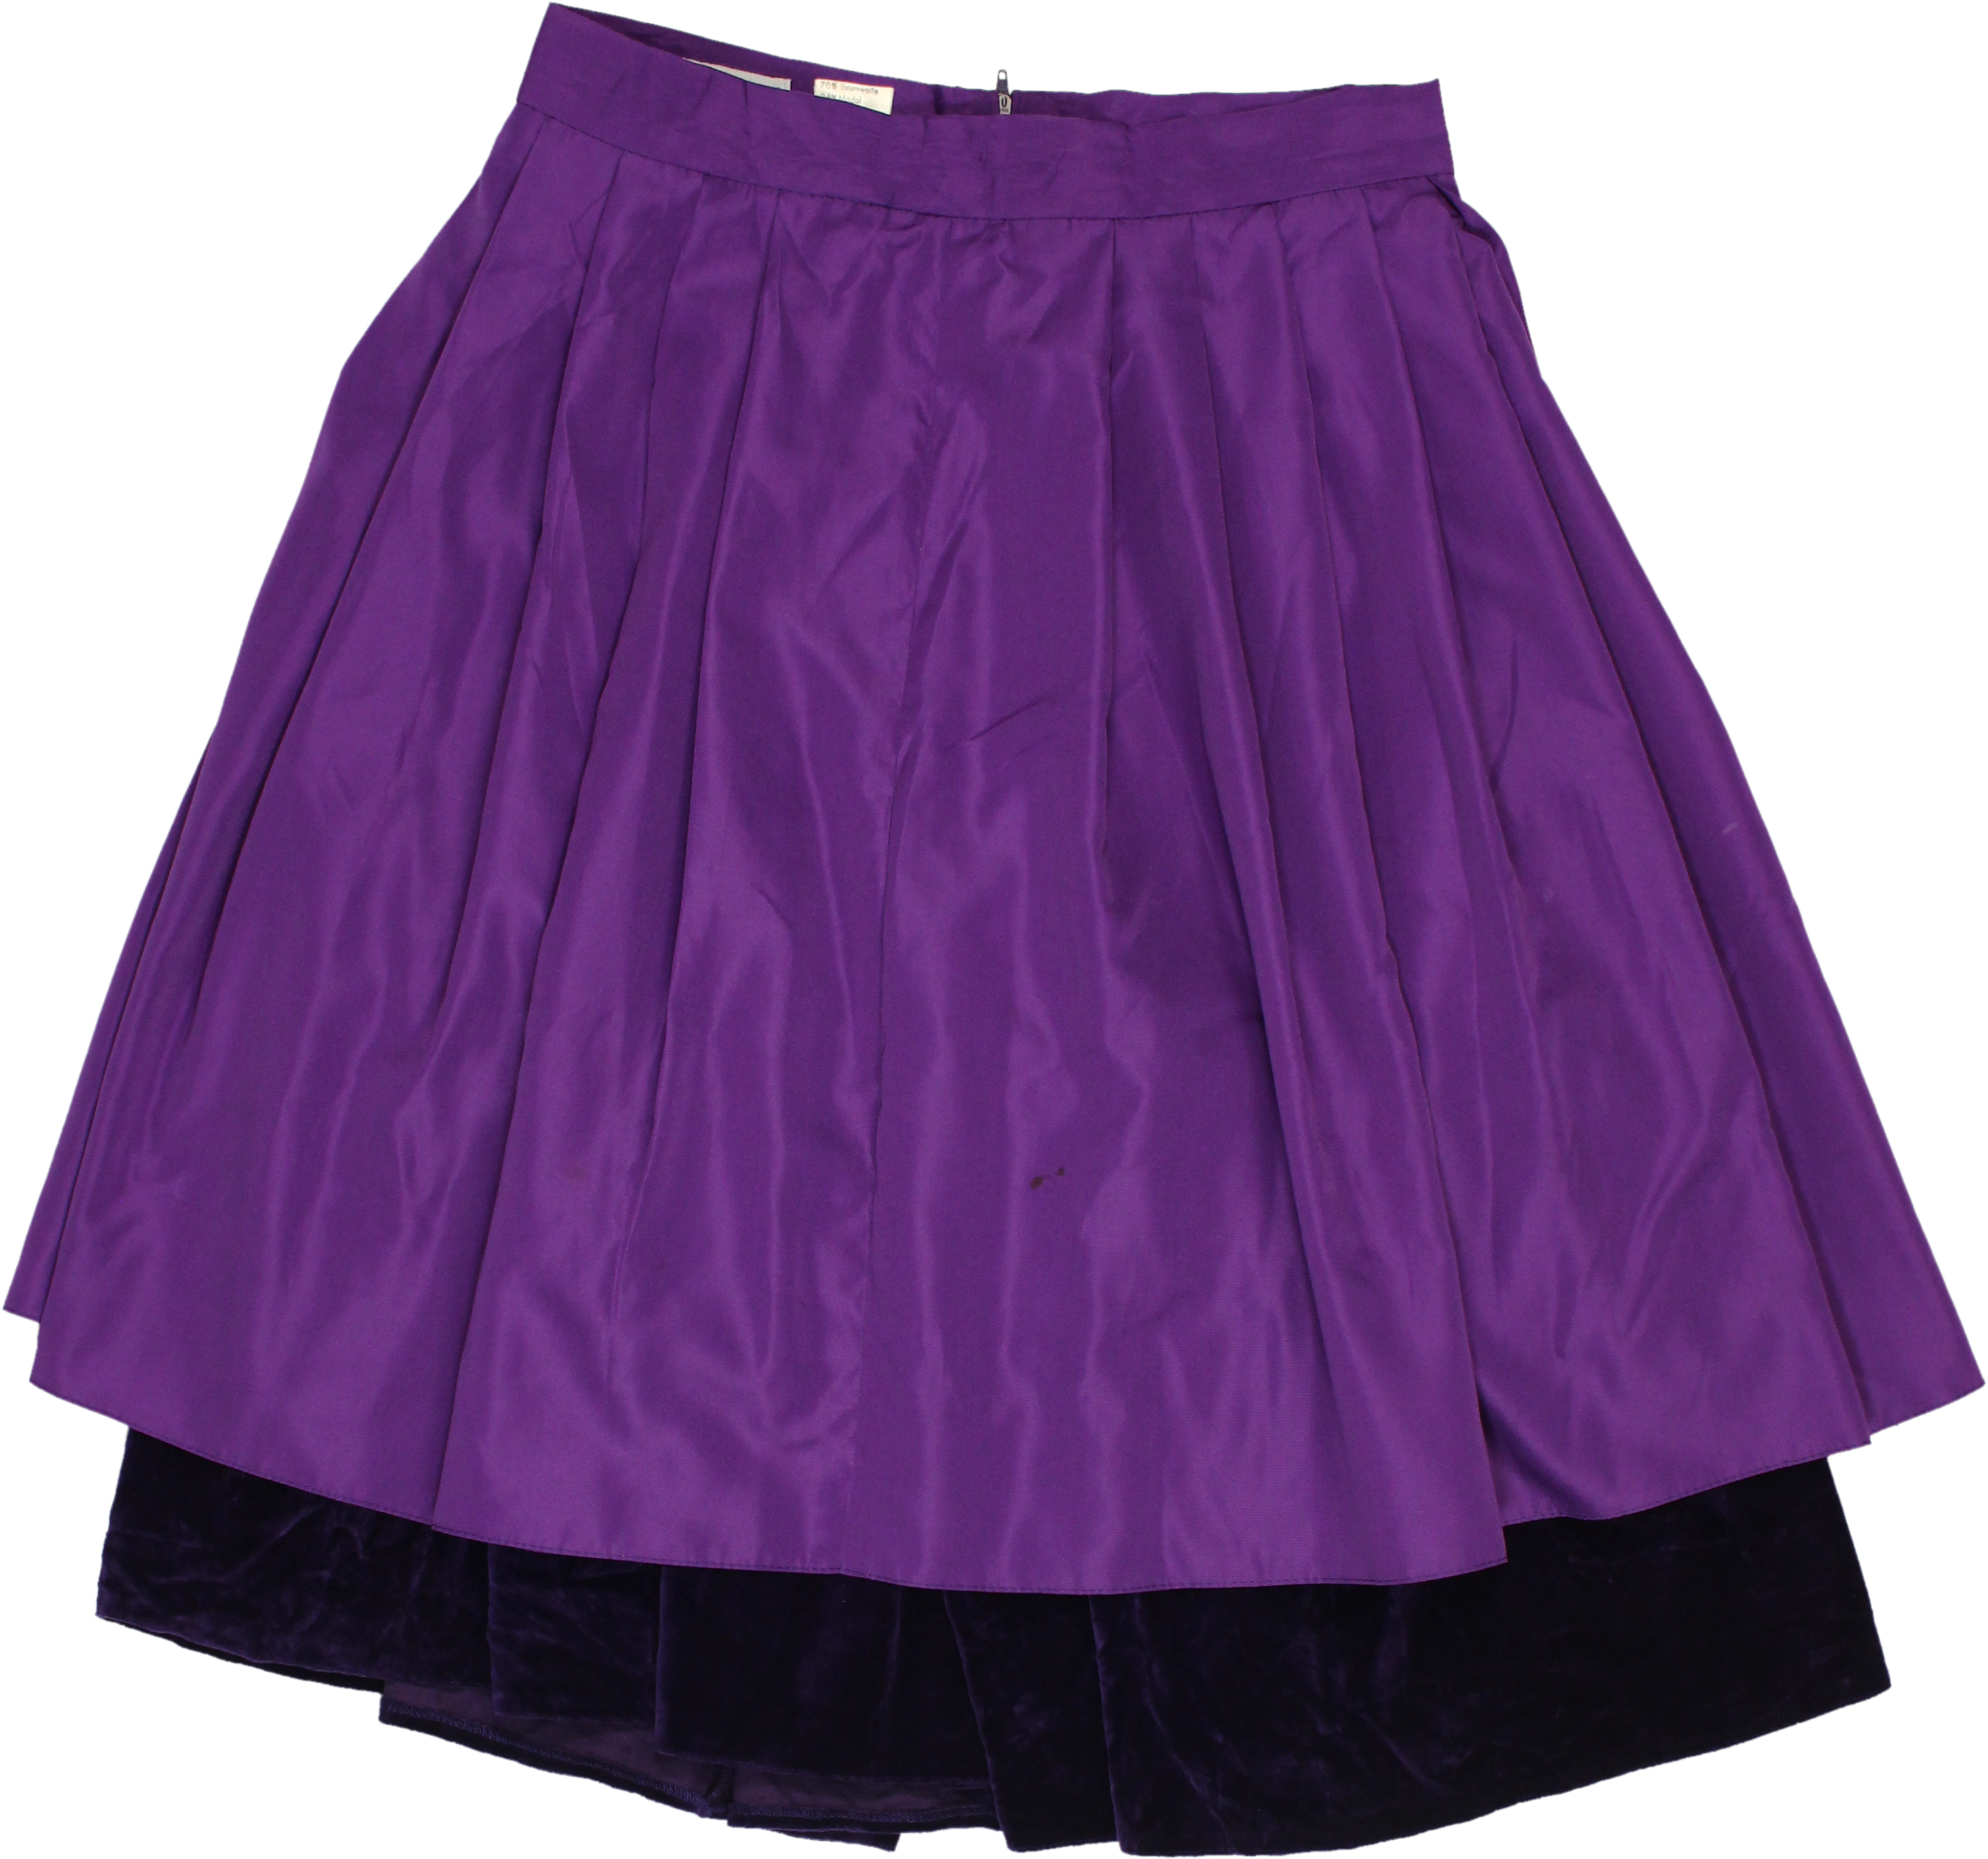 Brigitte Both - Skirt- ThriftTale.com - Vintage and second handclothing